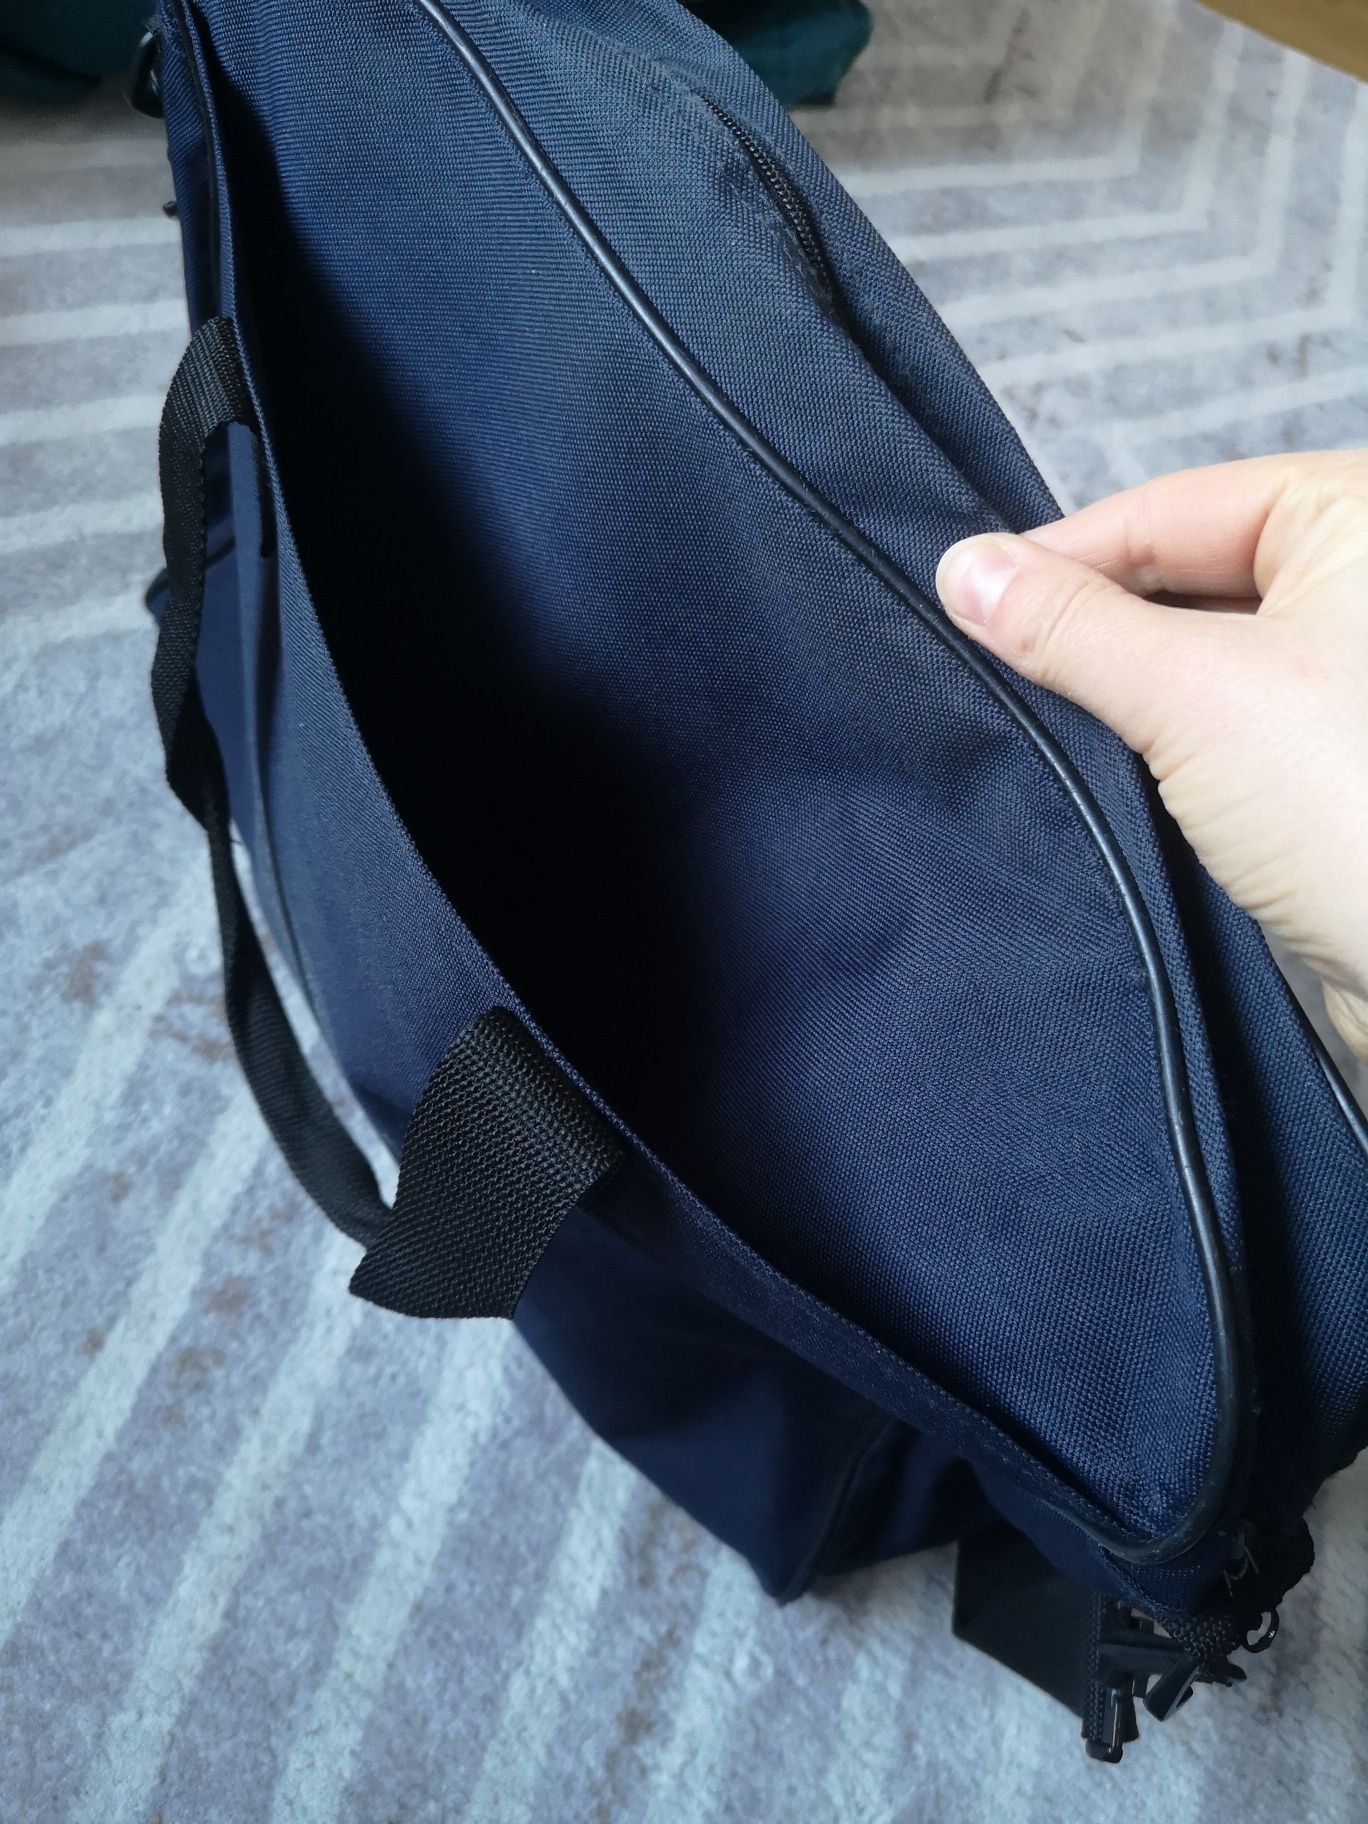 Torba podręczna do samolotu aktówka torebka na laptopa